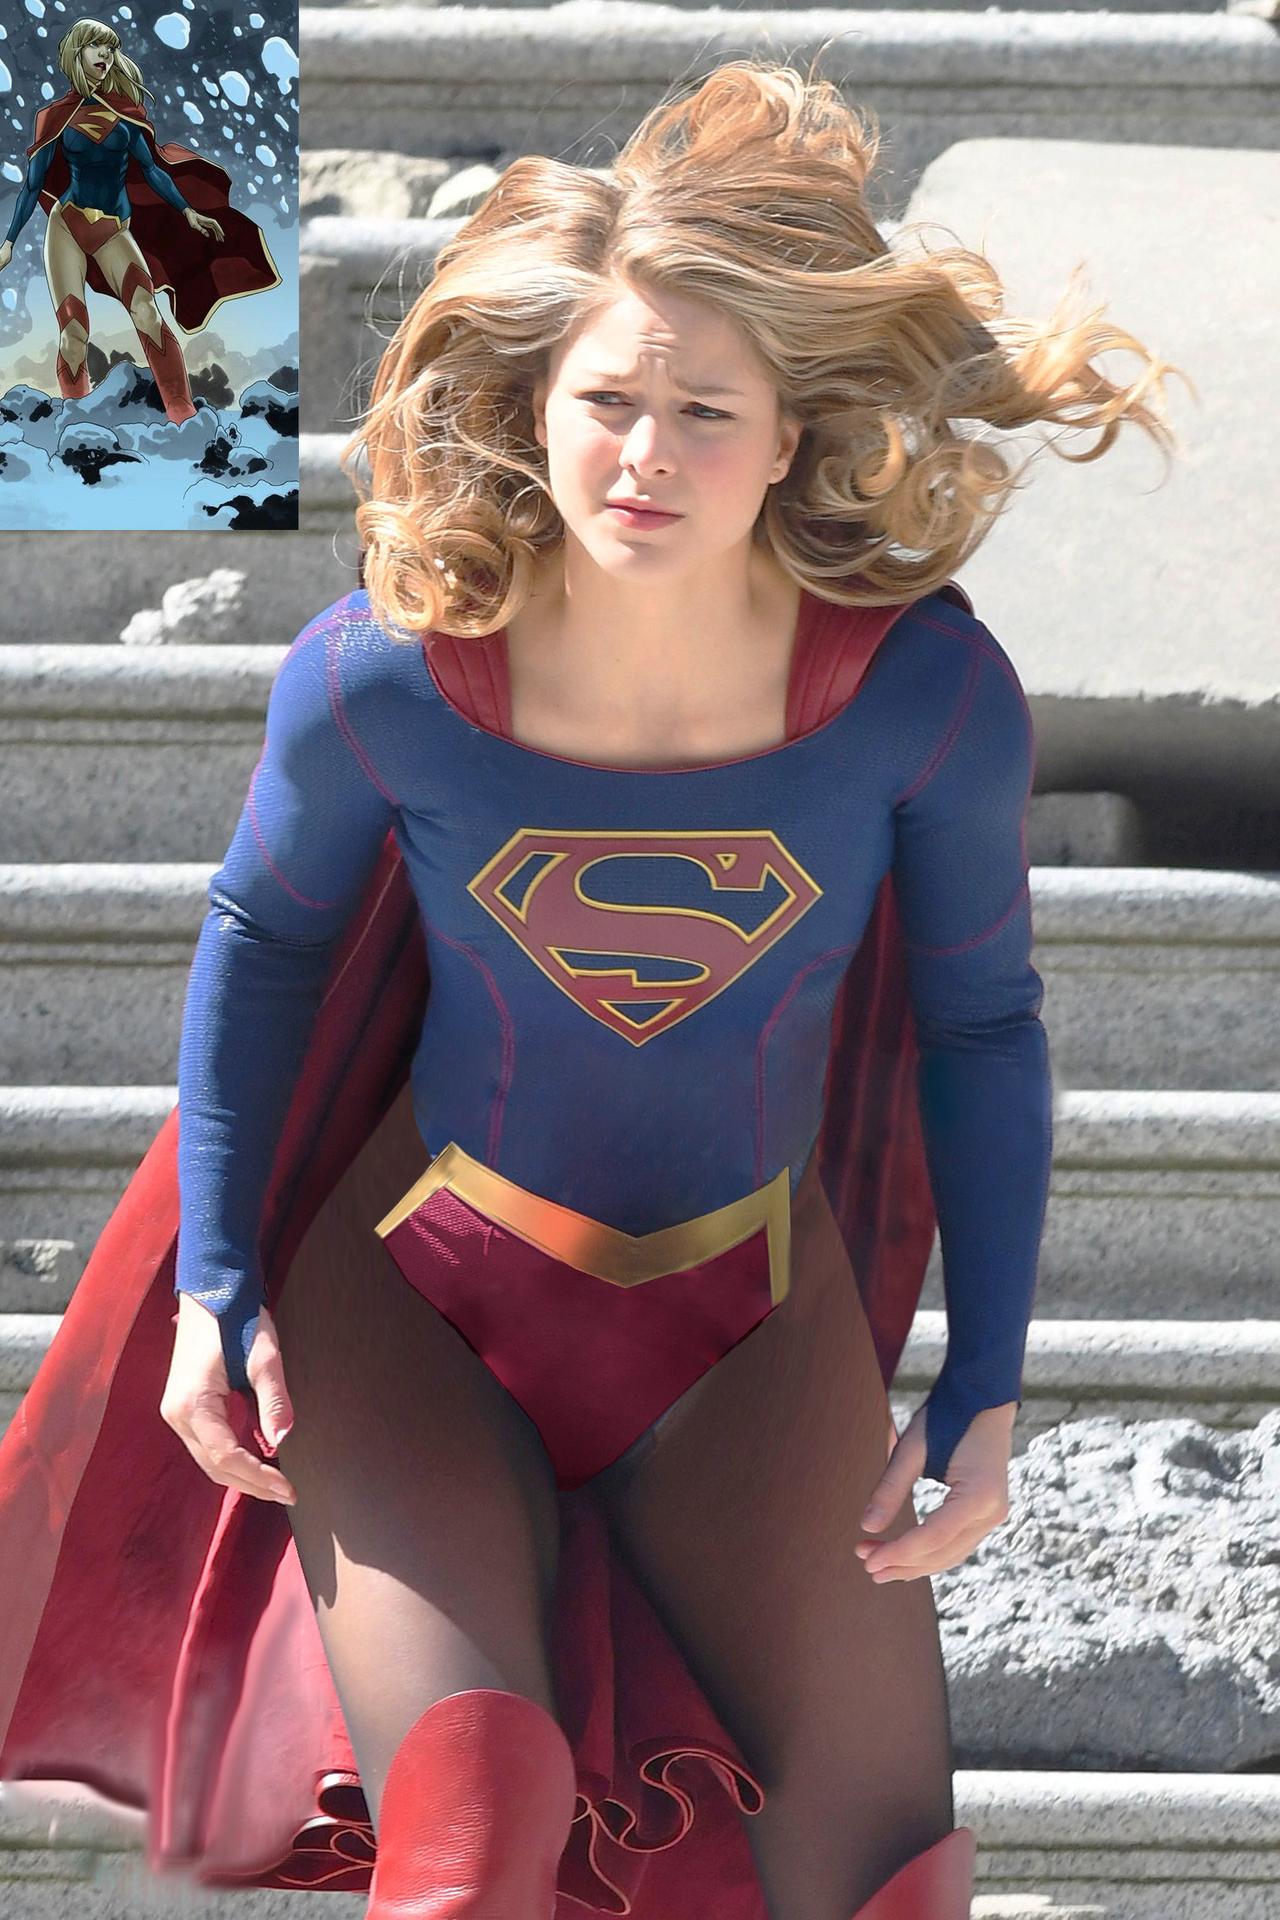 supergirl_melissa_benoist_new52_costume_by_tormentor_x_ddyk329-fullview.jpg